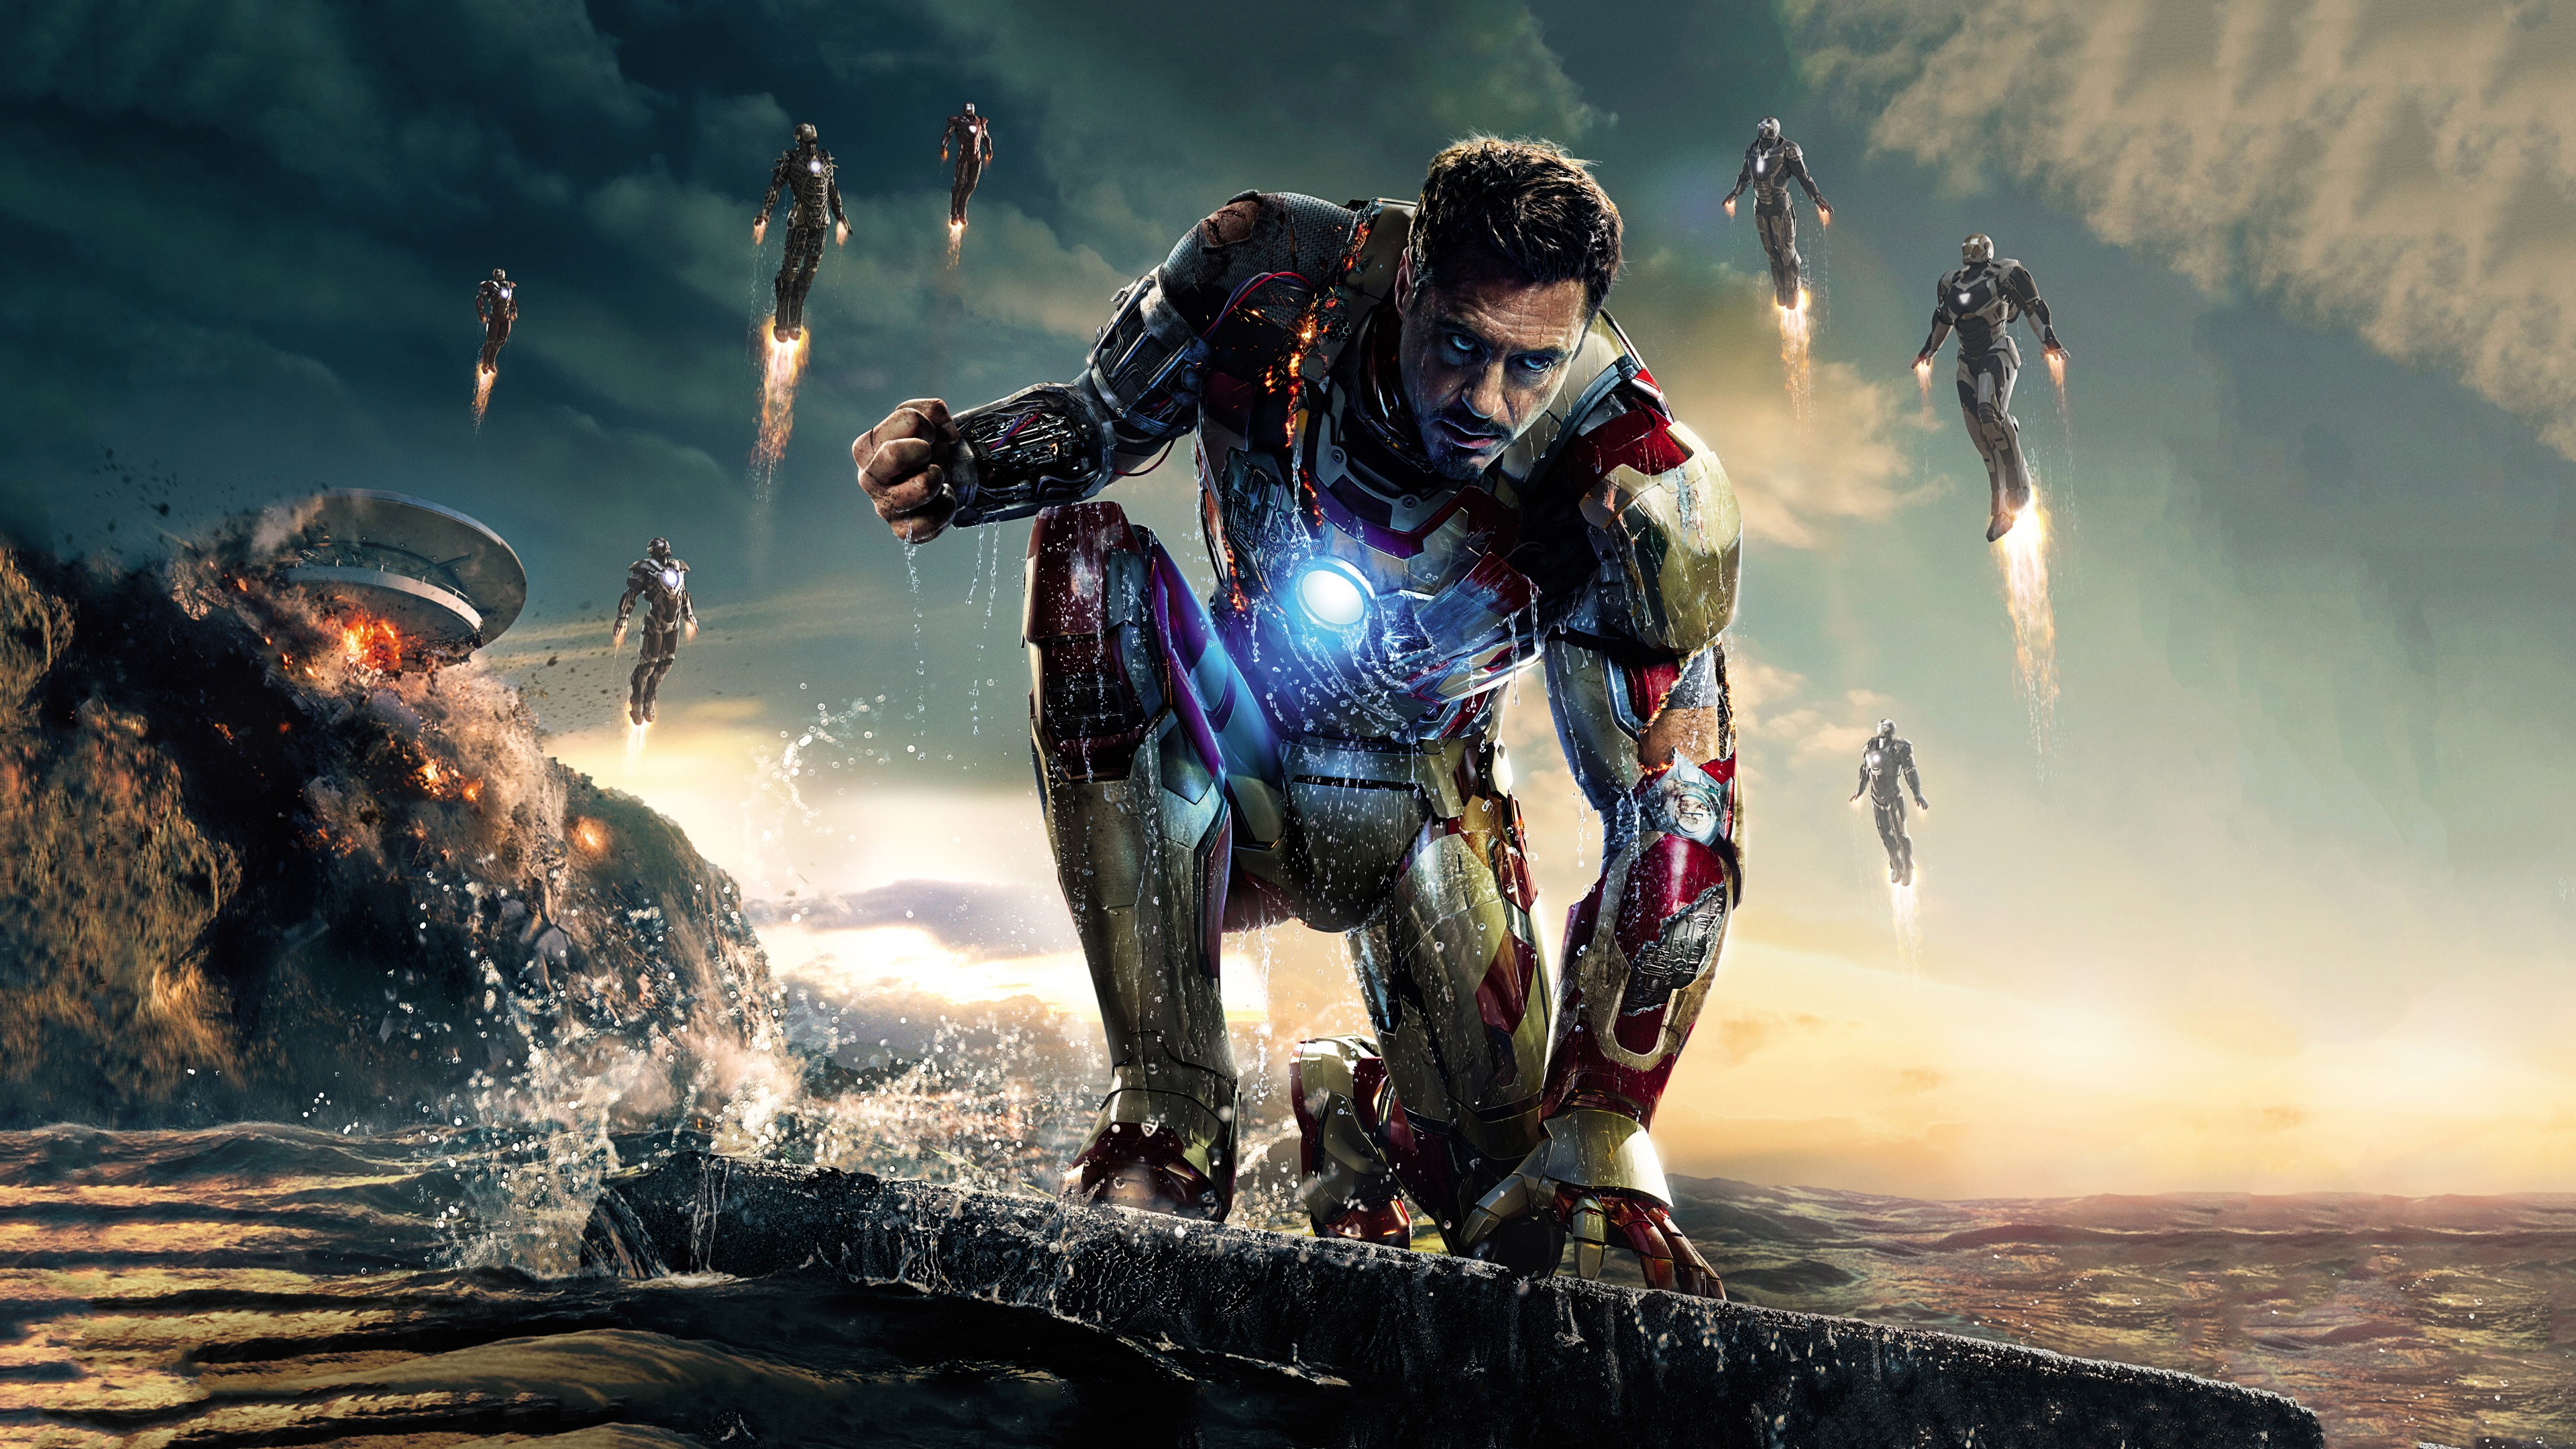 Wallpaper Avengers: Age of Ultron, Avengers Robert Downey Jr., Iron Man, Tony Stark, Poster, Movies